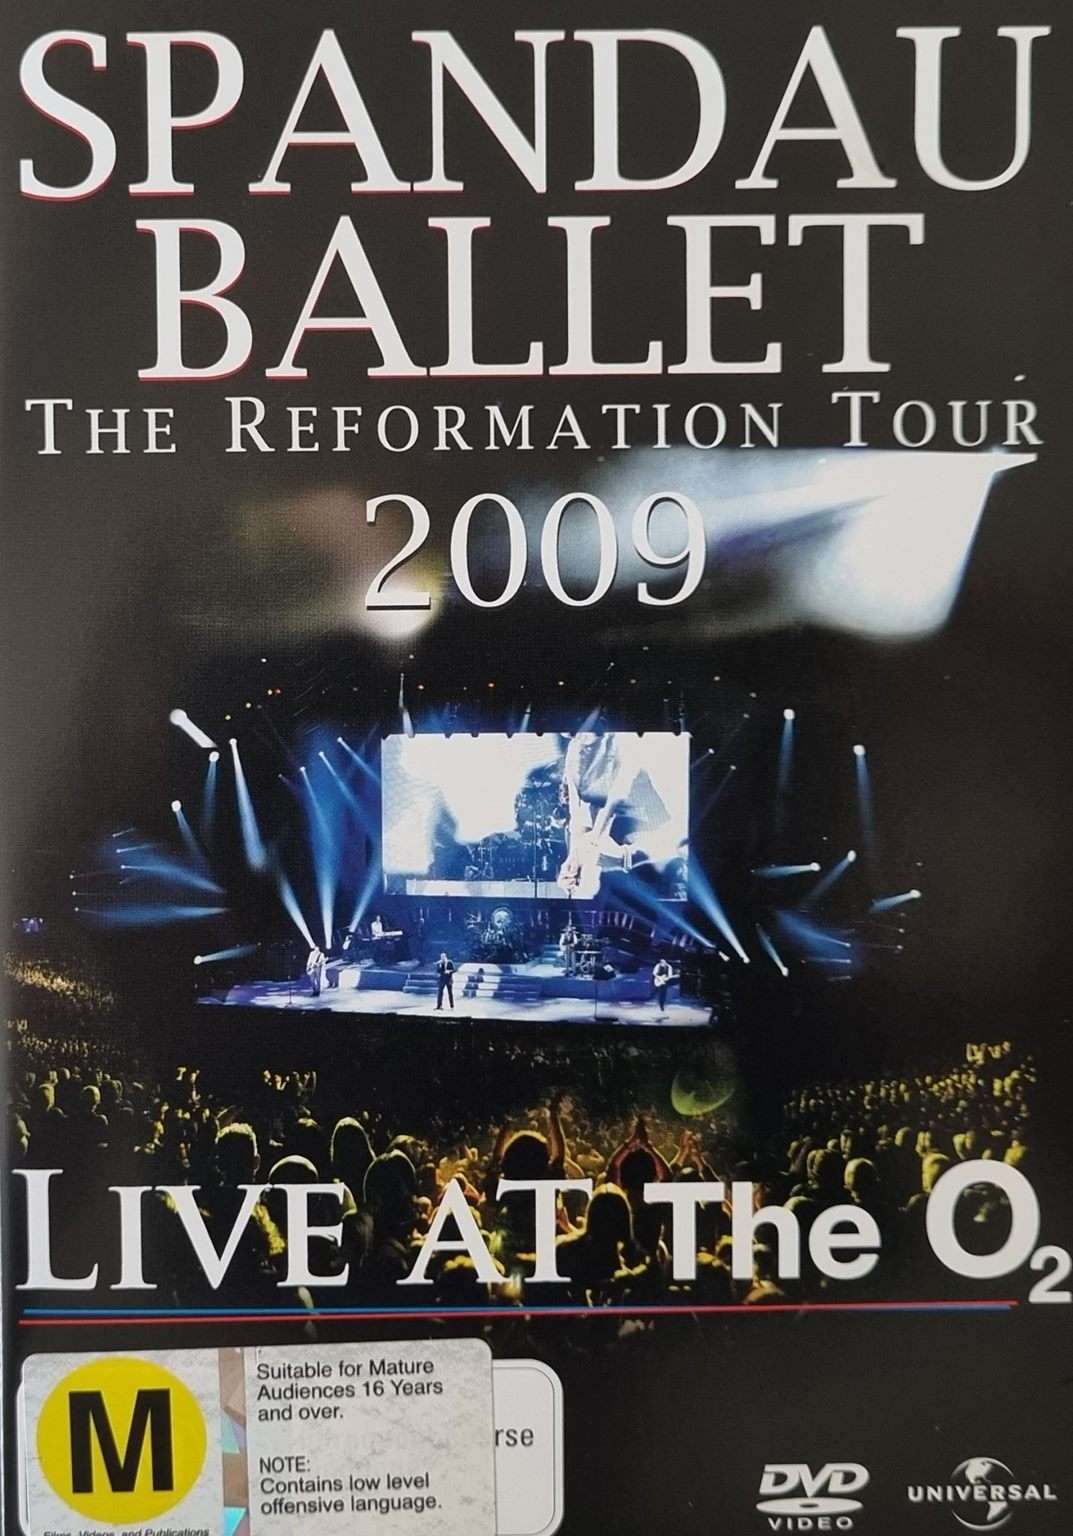 Spandau Ballet - The Reformation Tour 2009